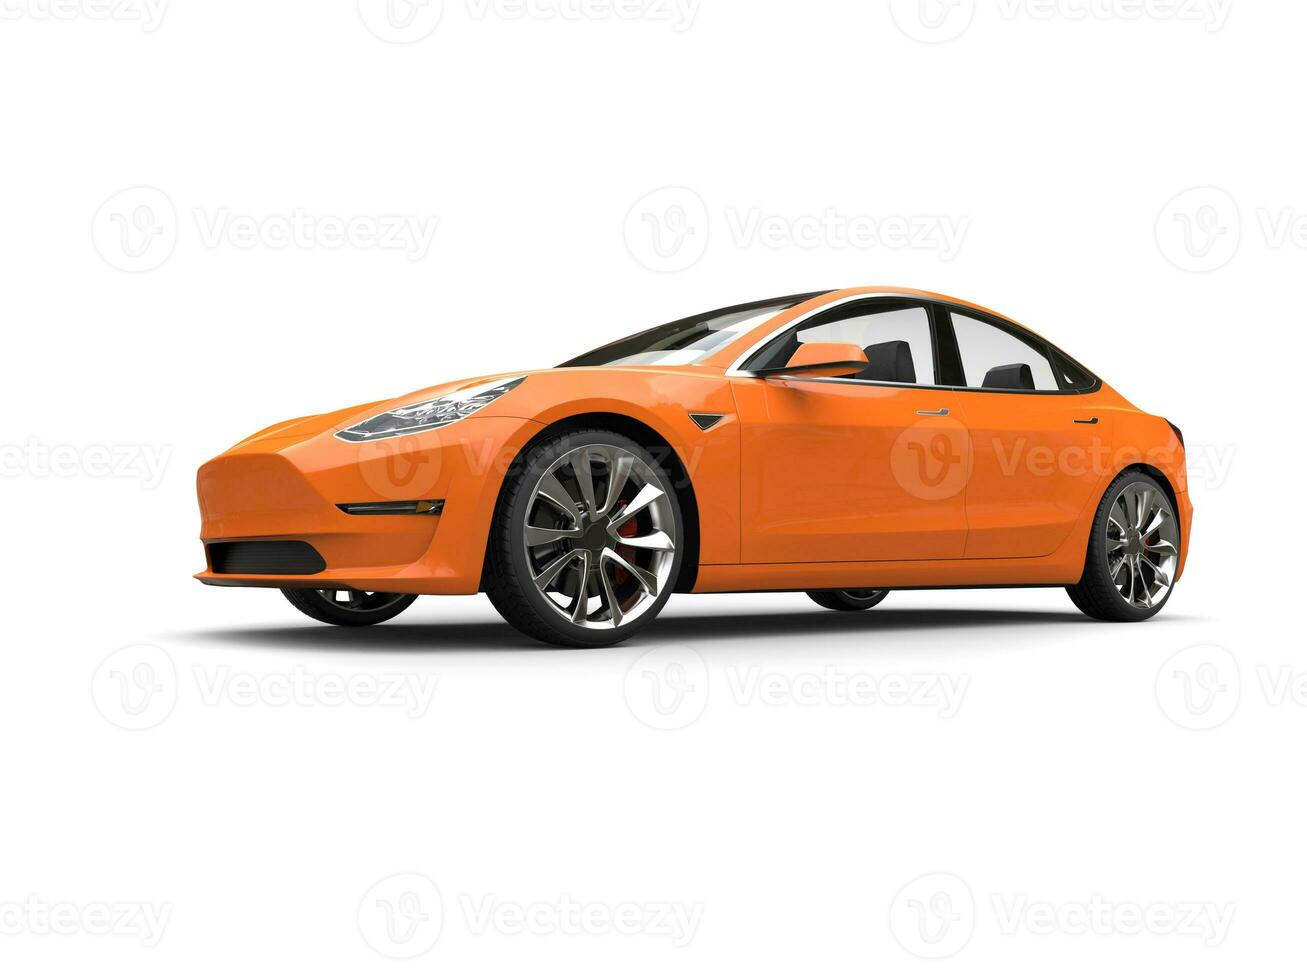 legal moderno elétrico carro - calor onda laranja pintura foto